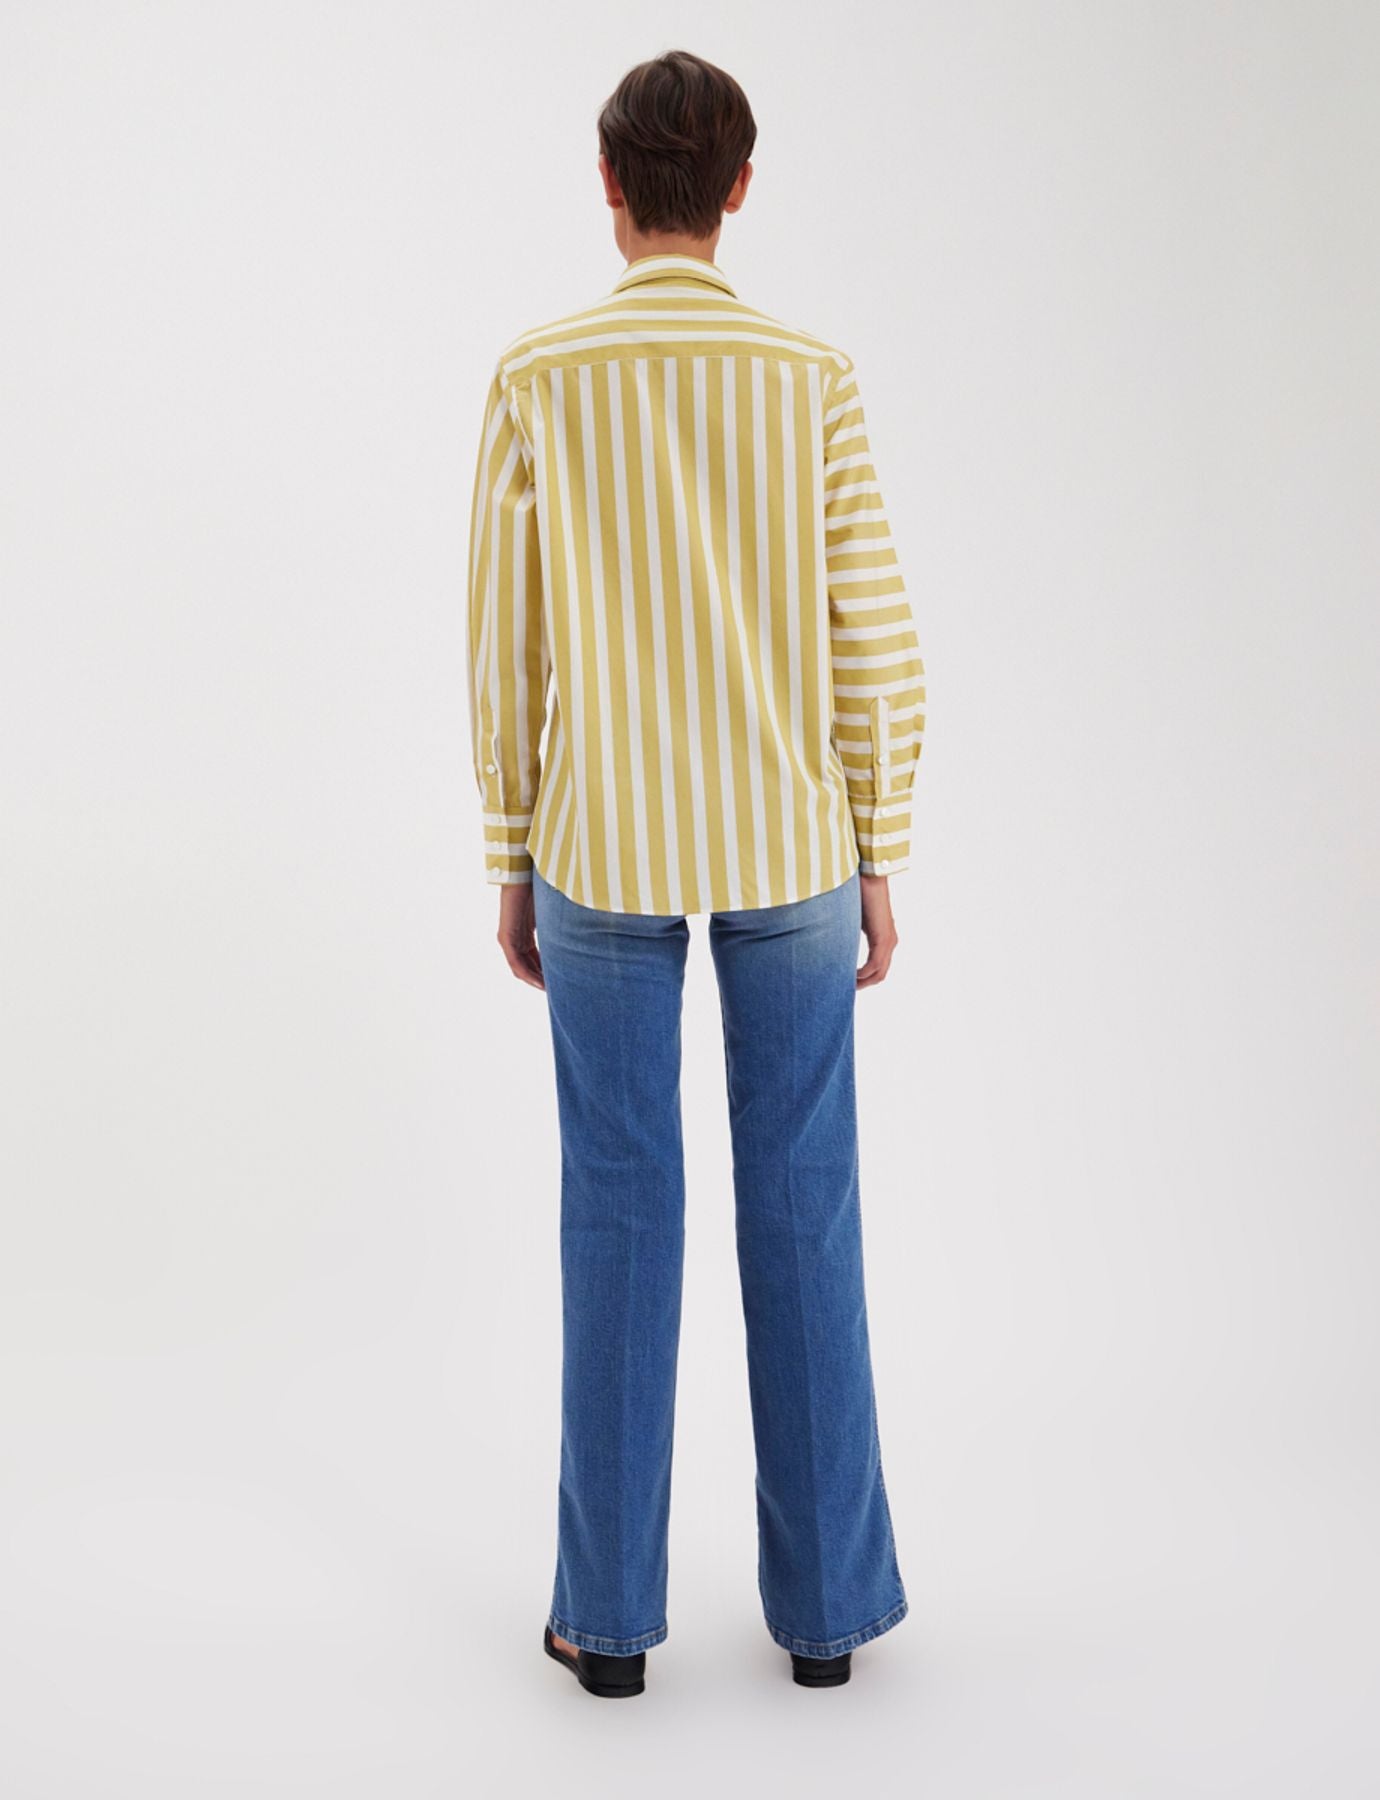 shirt-maureen-yellow-and-white-stripes